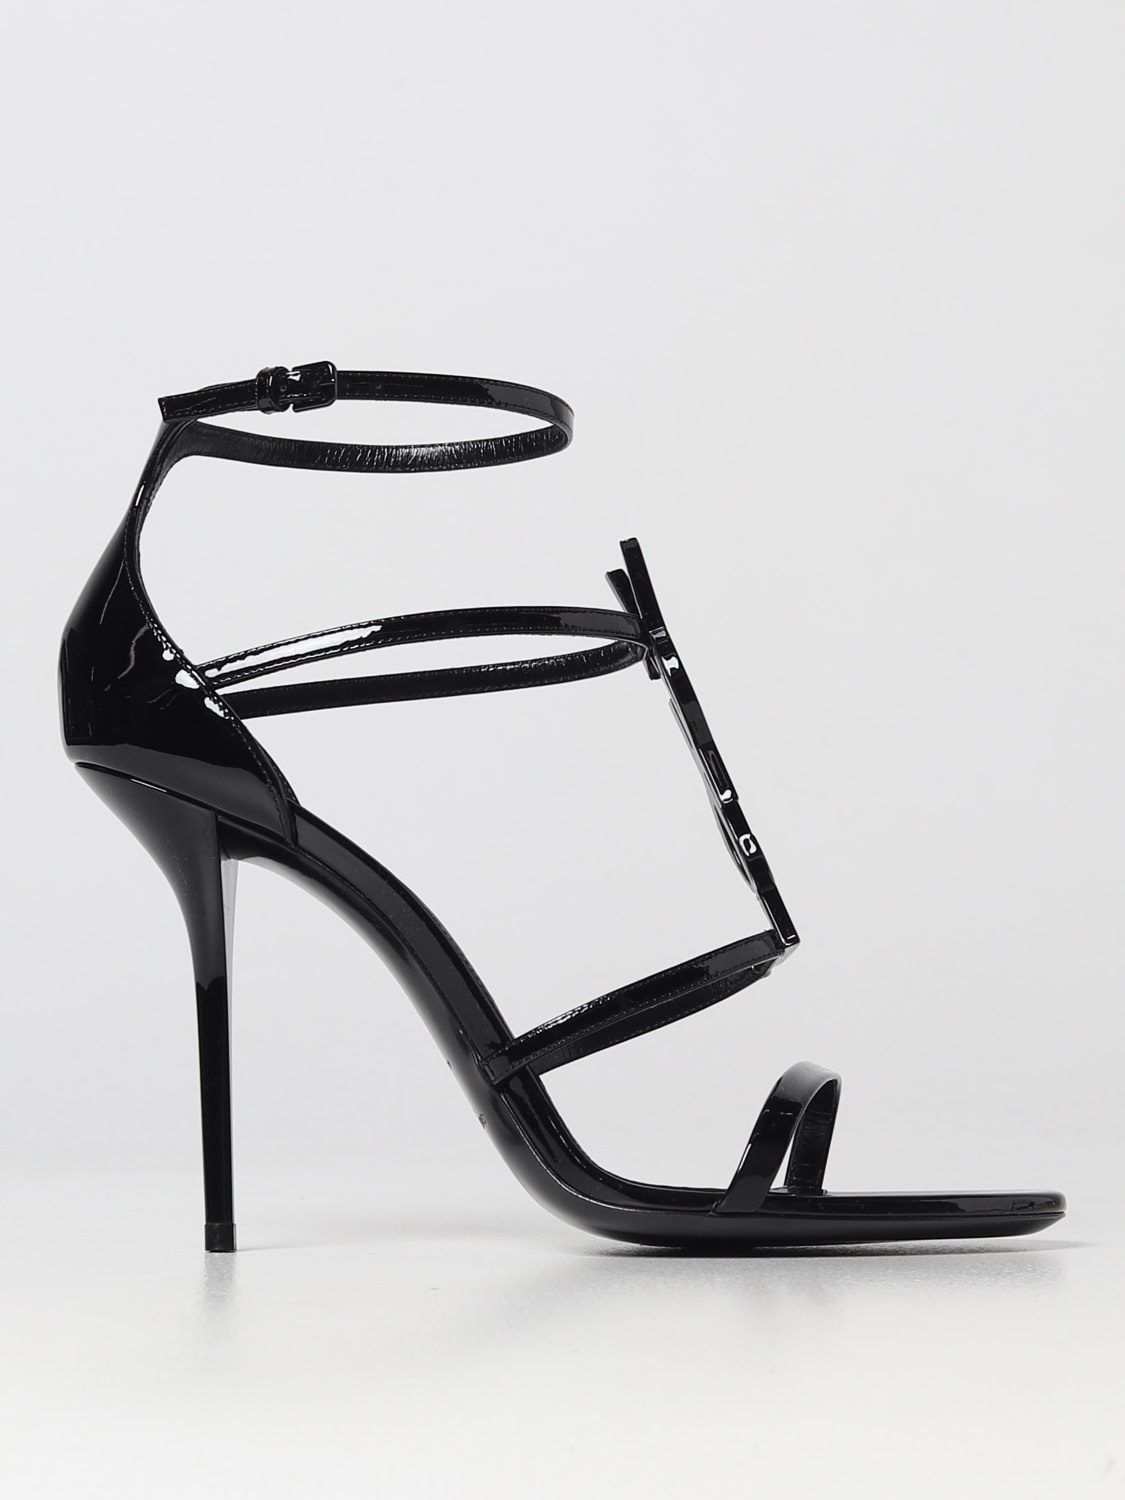 Cassandra Saint Laurent sandals in patent leather - 1